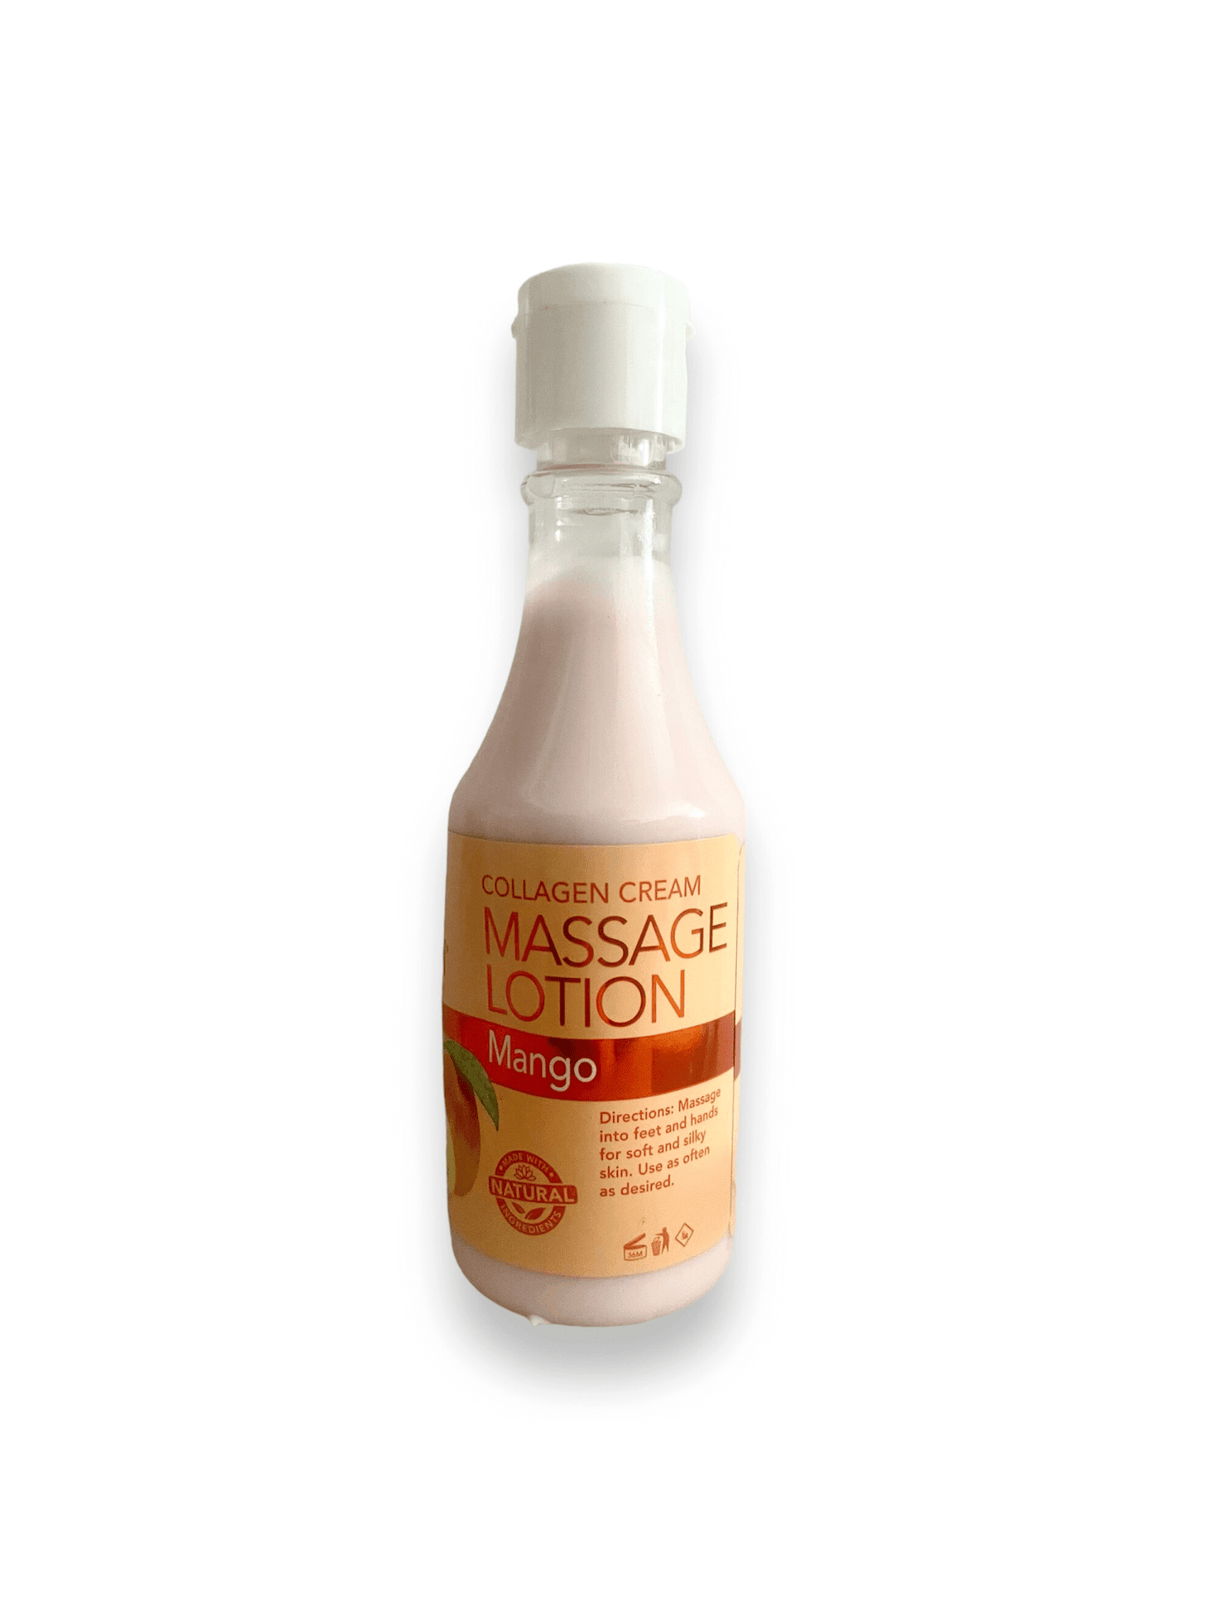 La Palm Collagen Cream Massage Lotion Mango